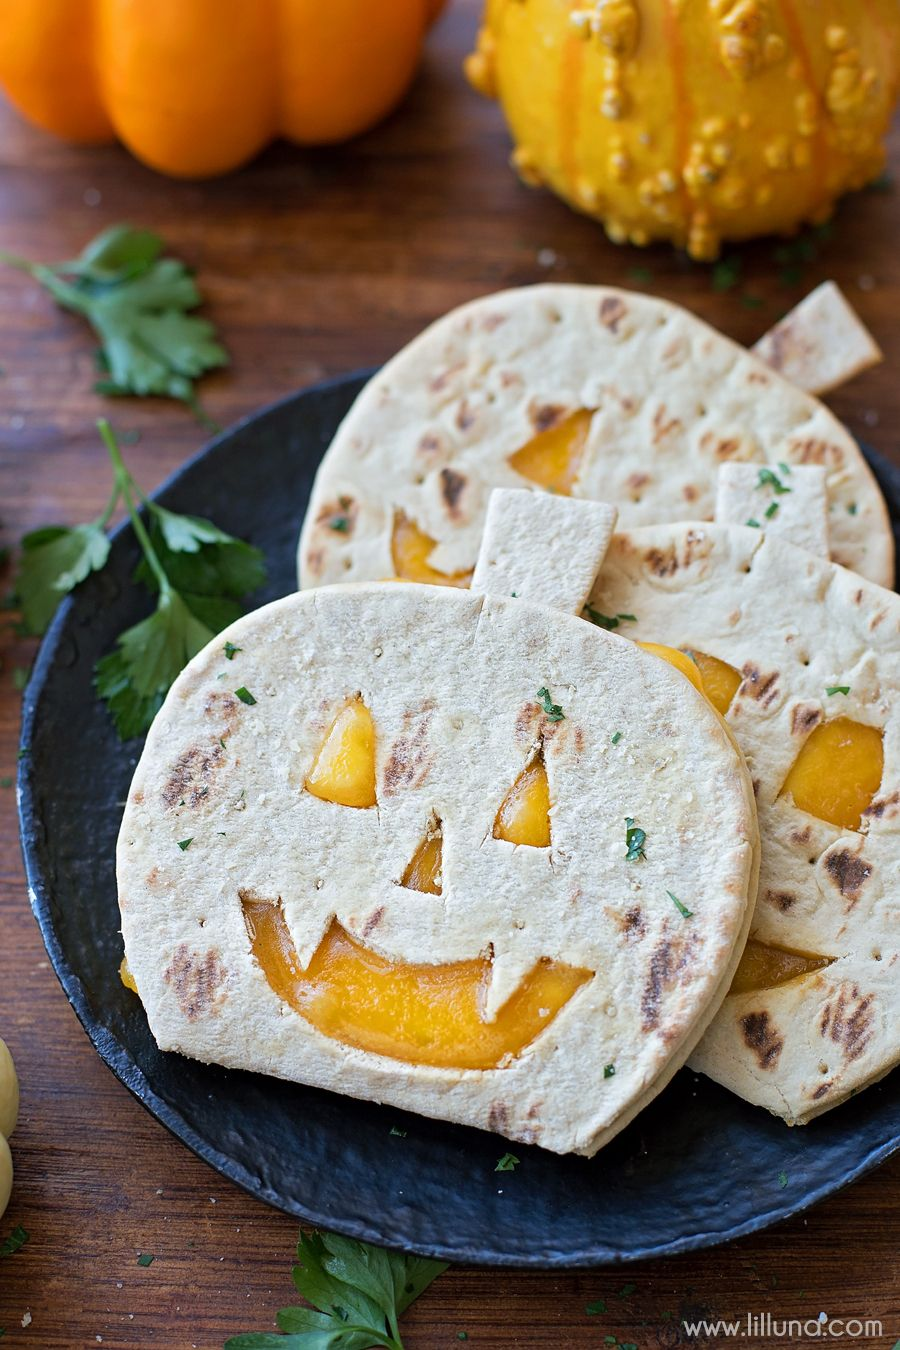 110 Best Halloween Party Foods Ideas